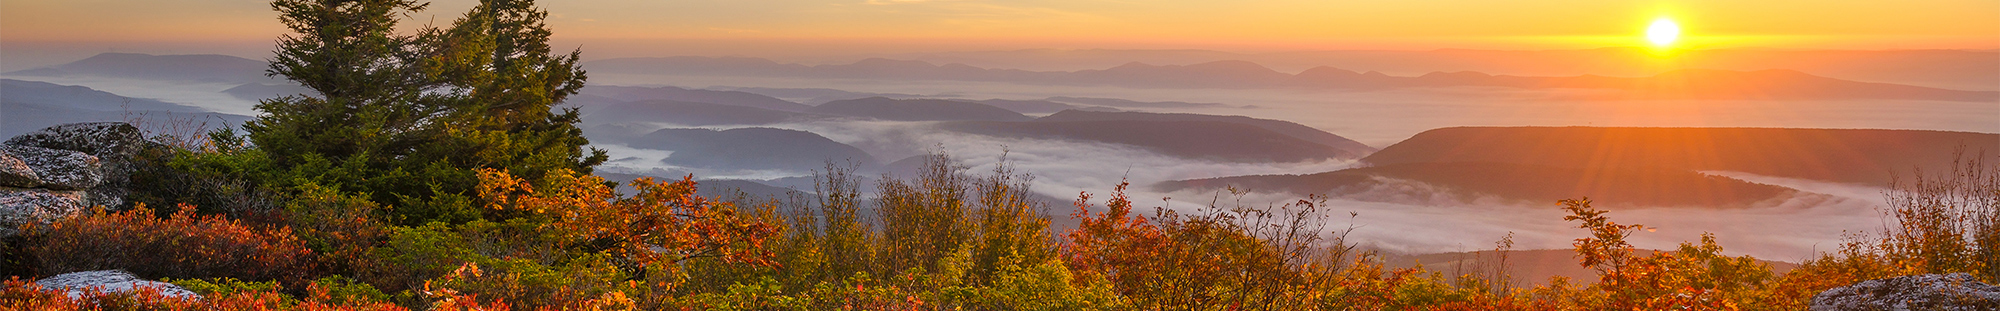 West Virginia mountains at sunrise